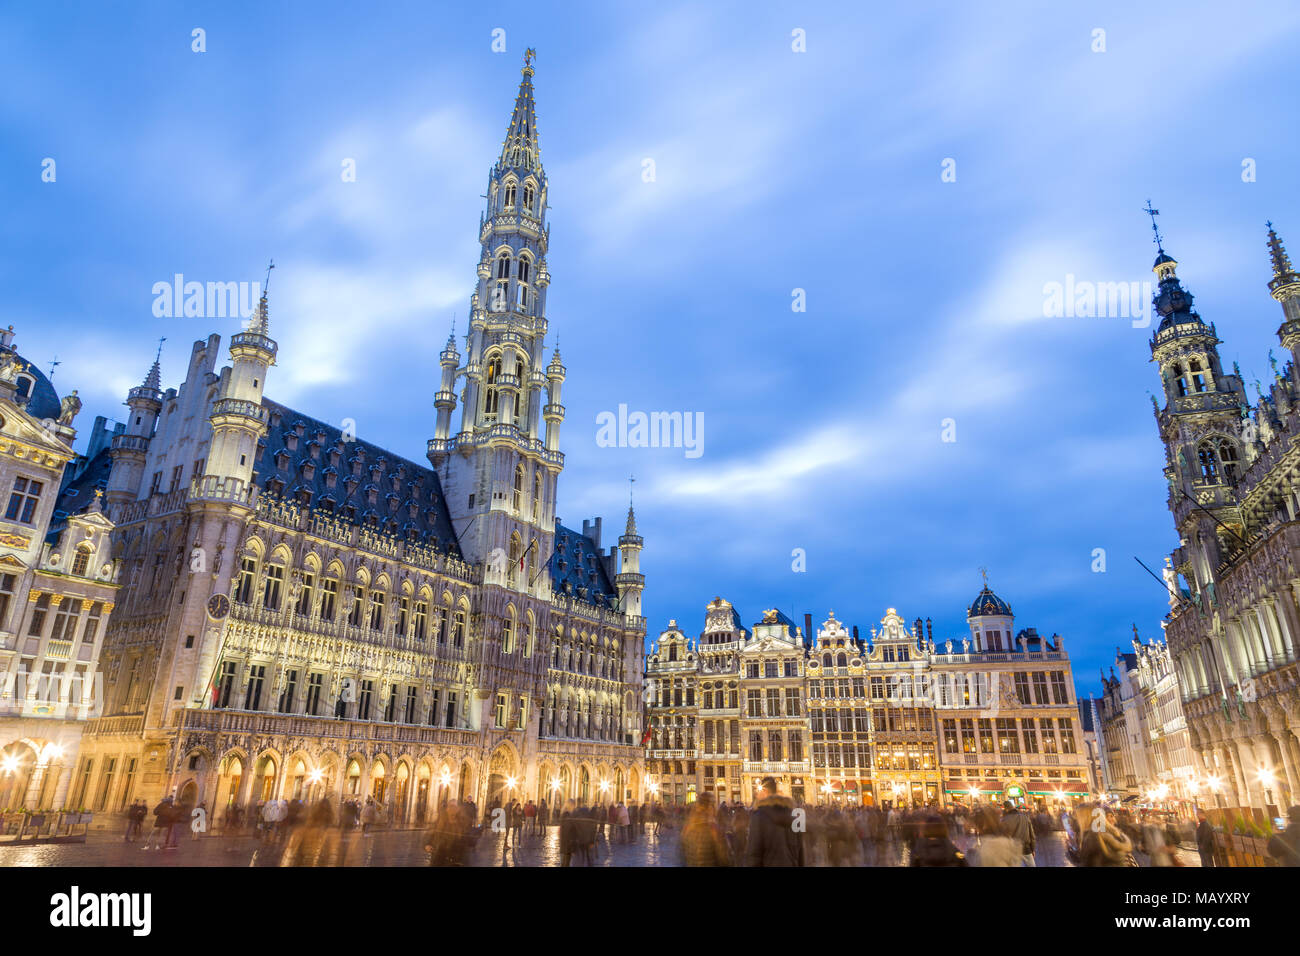 Rathaus Hotel de Ville und barocke Fassade Häuser am Grand-Place Grote Markt, Brüssel, Belgien Stockfoto